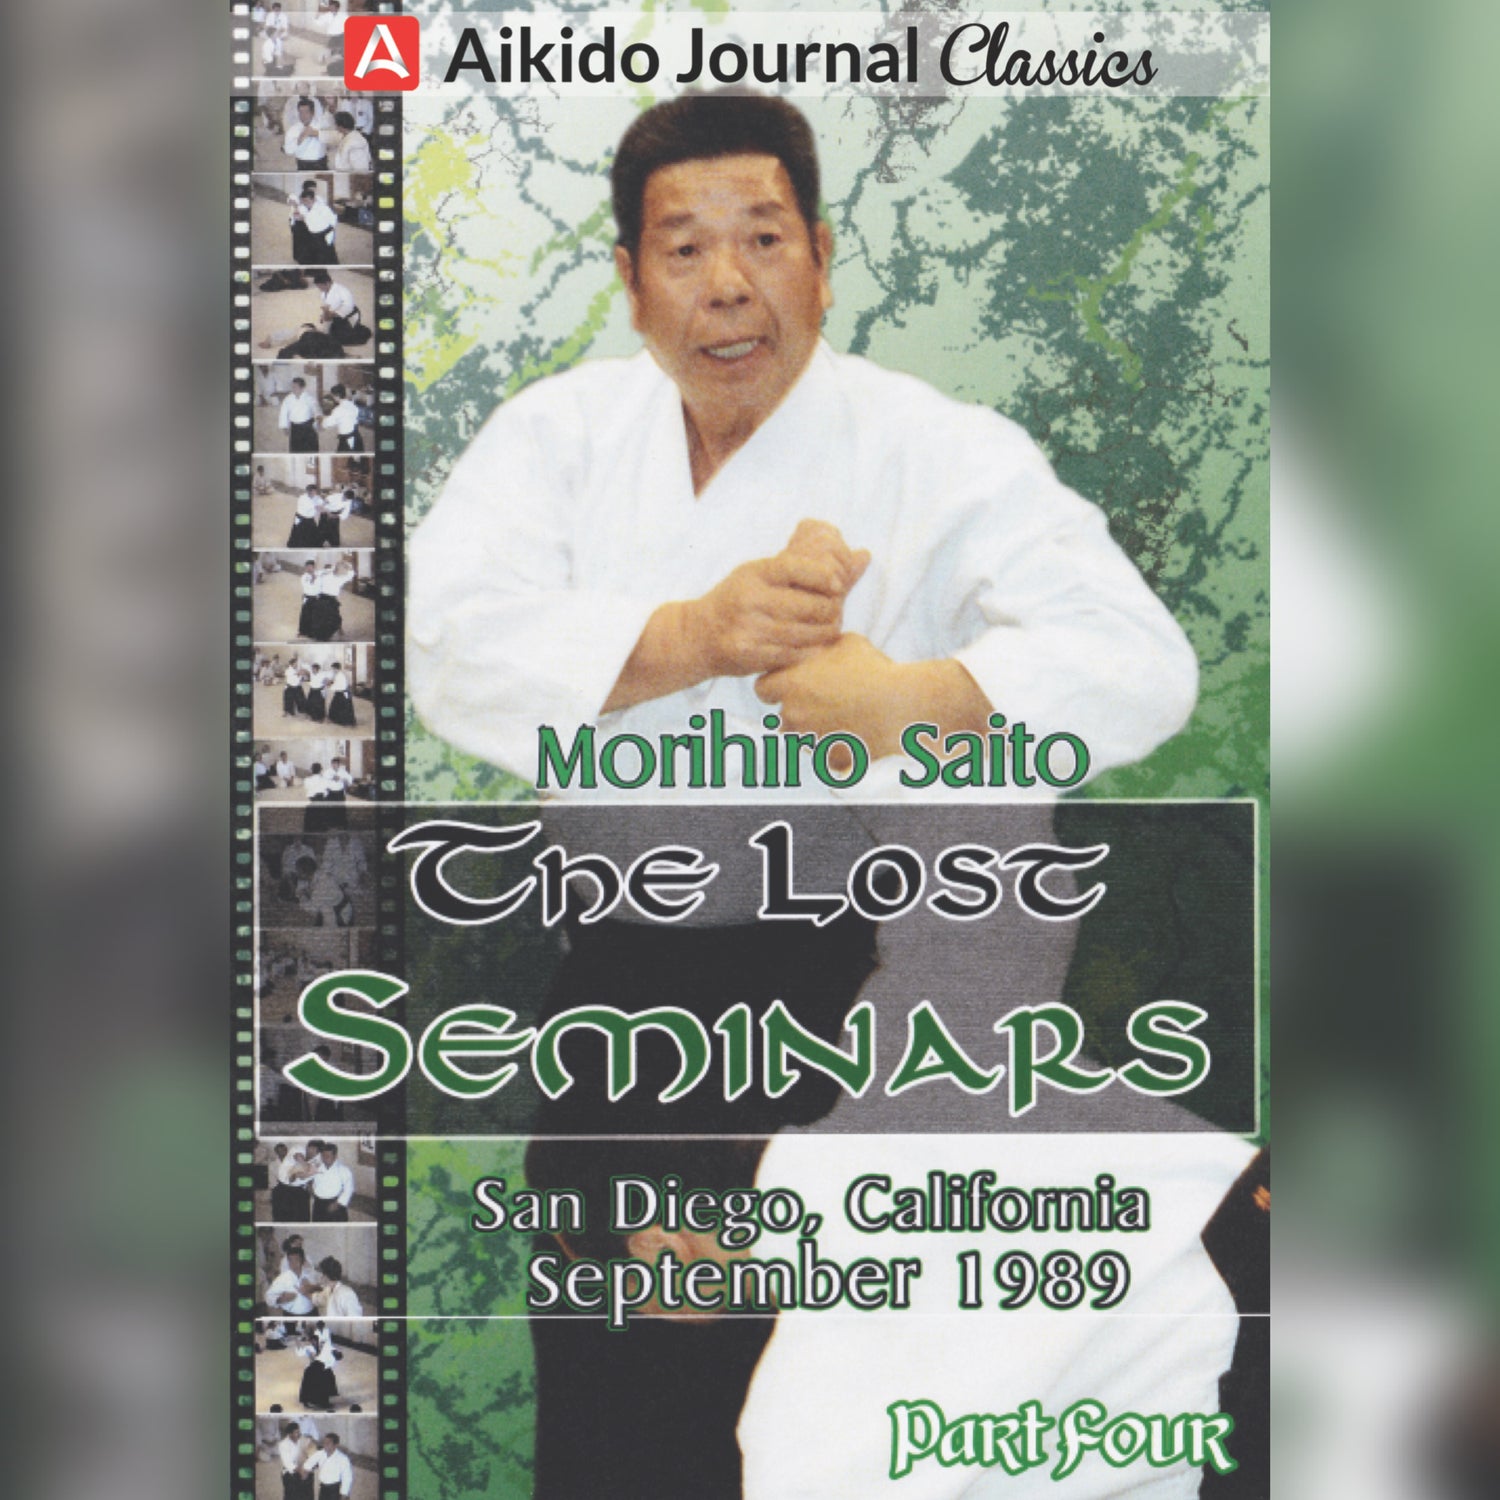 Lost Seminars 4: San Diego 1989 by Morihiro Saito (On Demand)